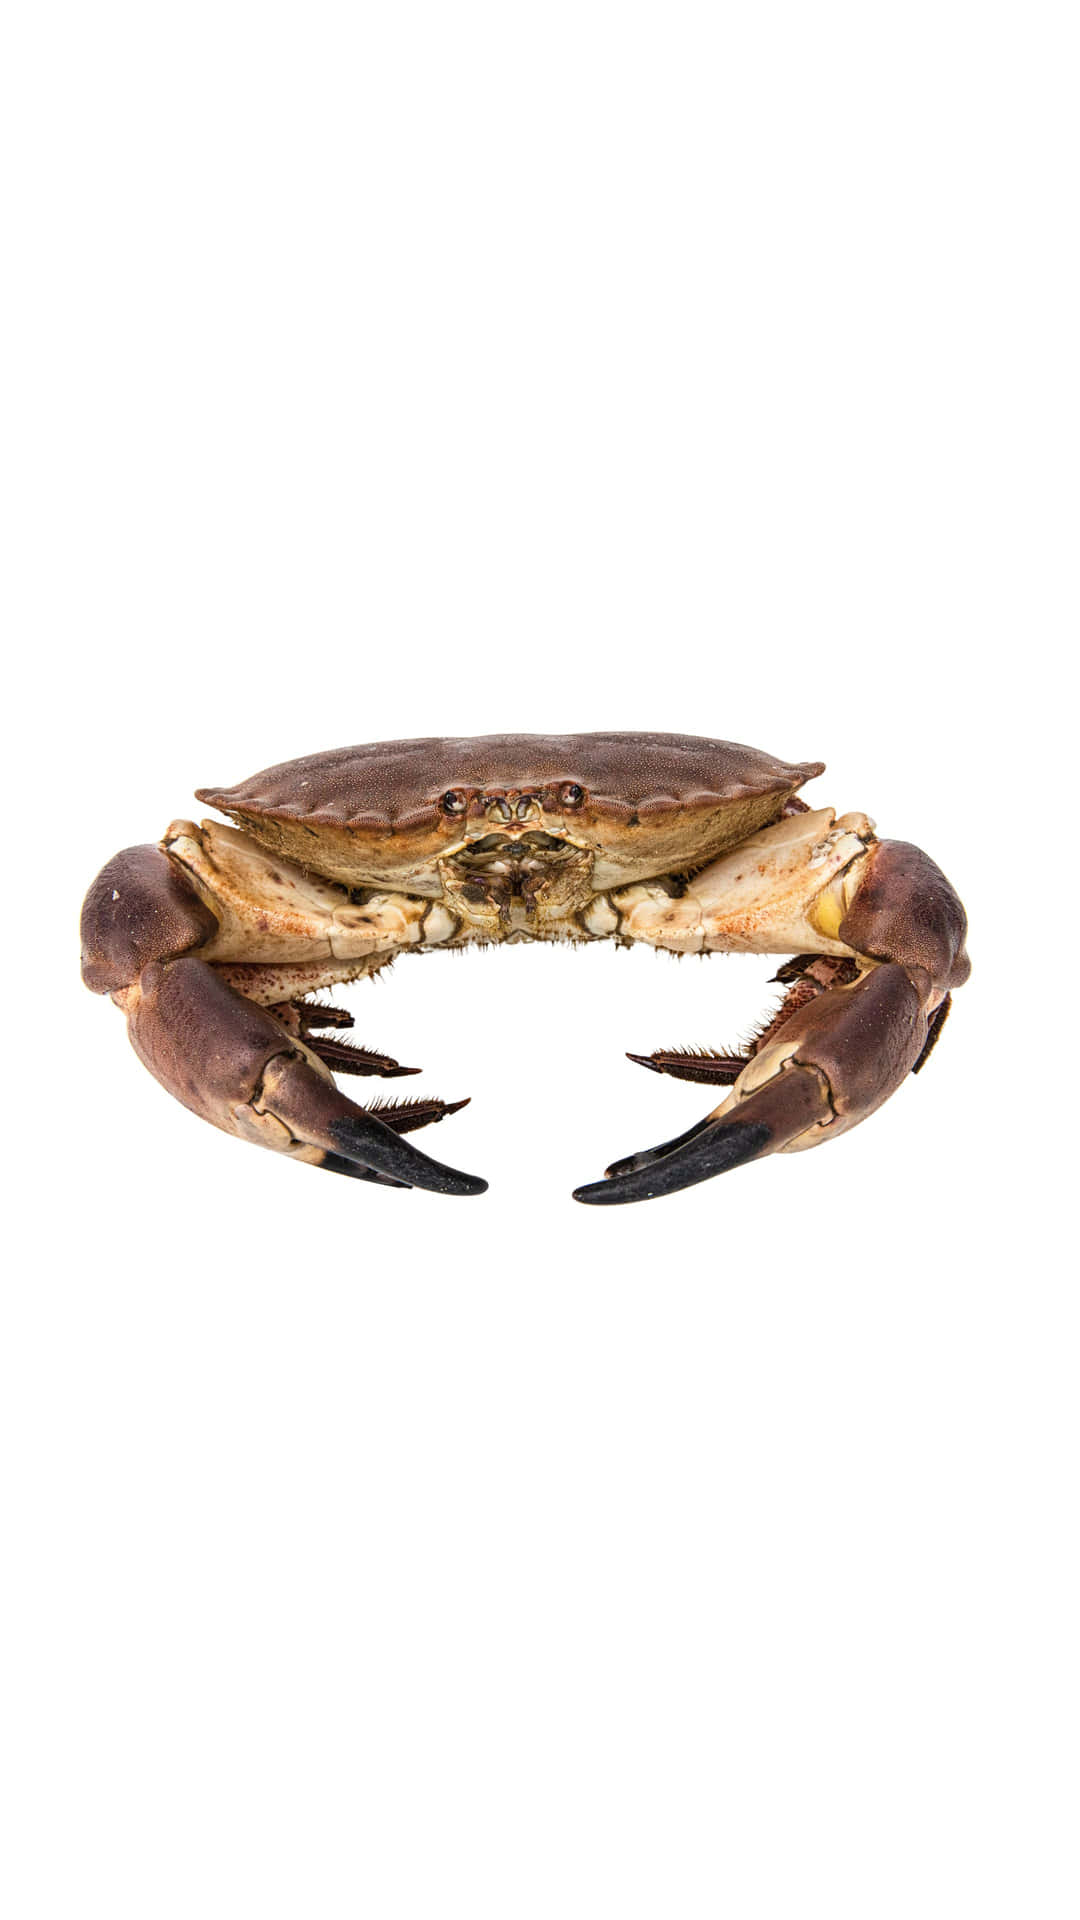 Brown Crab White Background Wallpaper